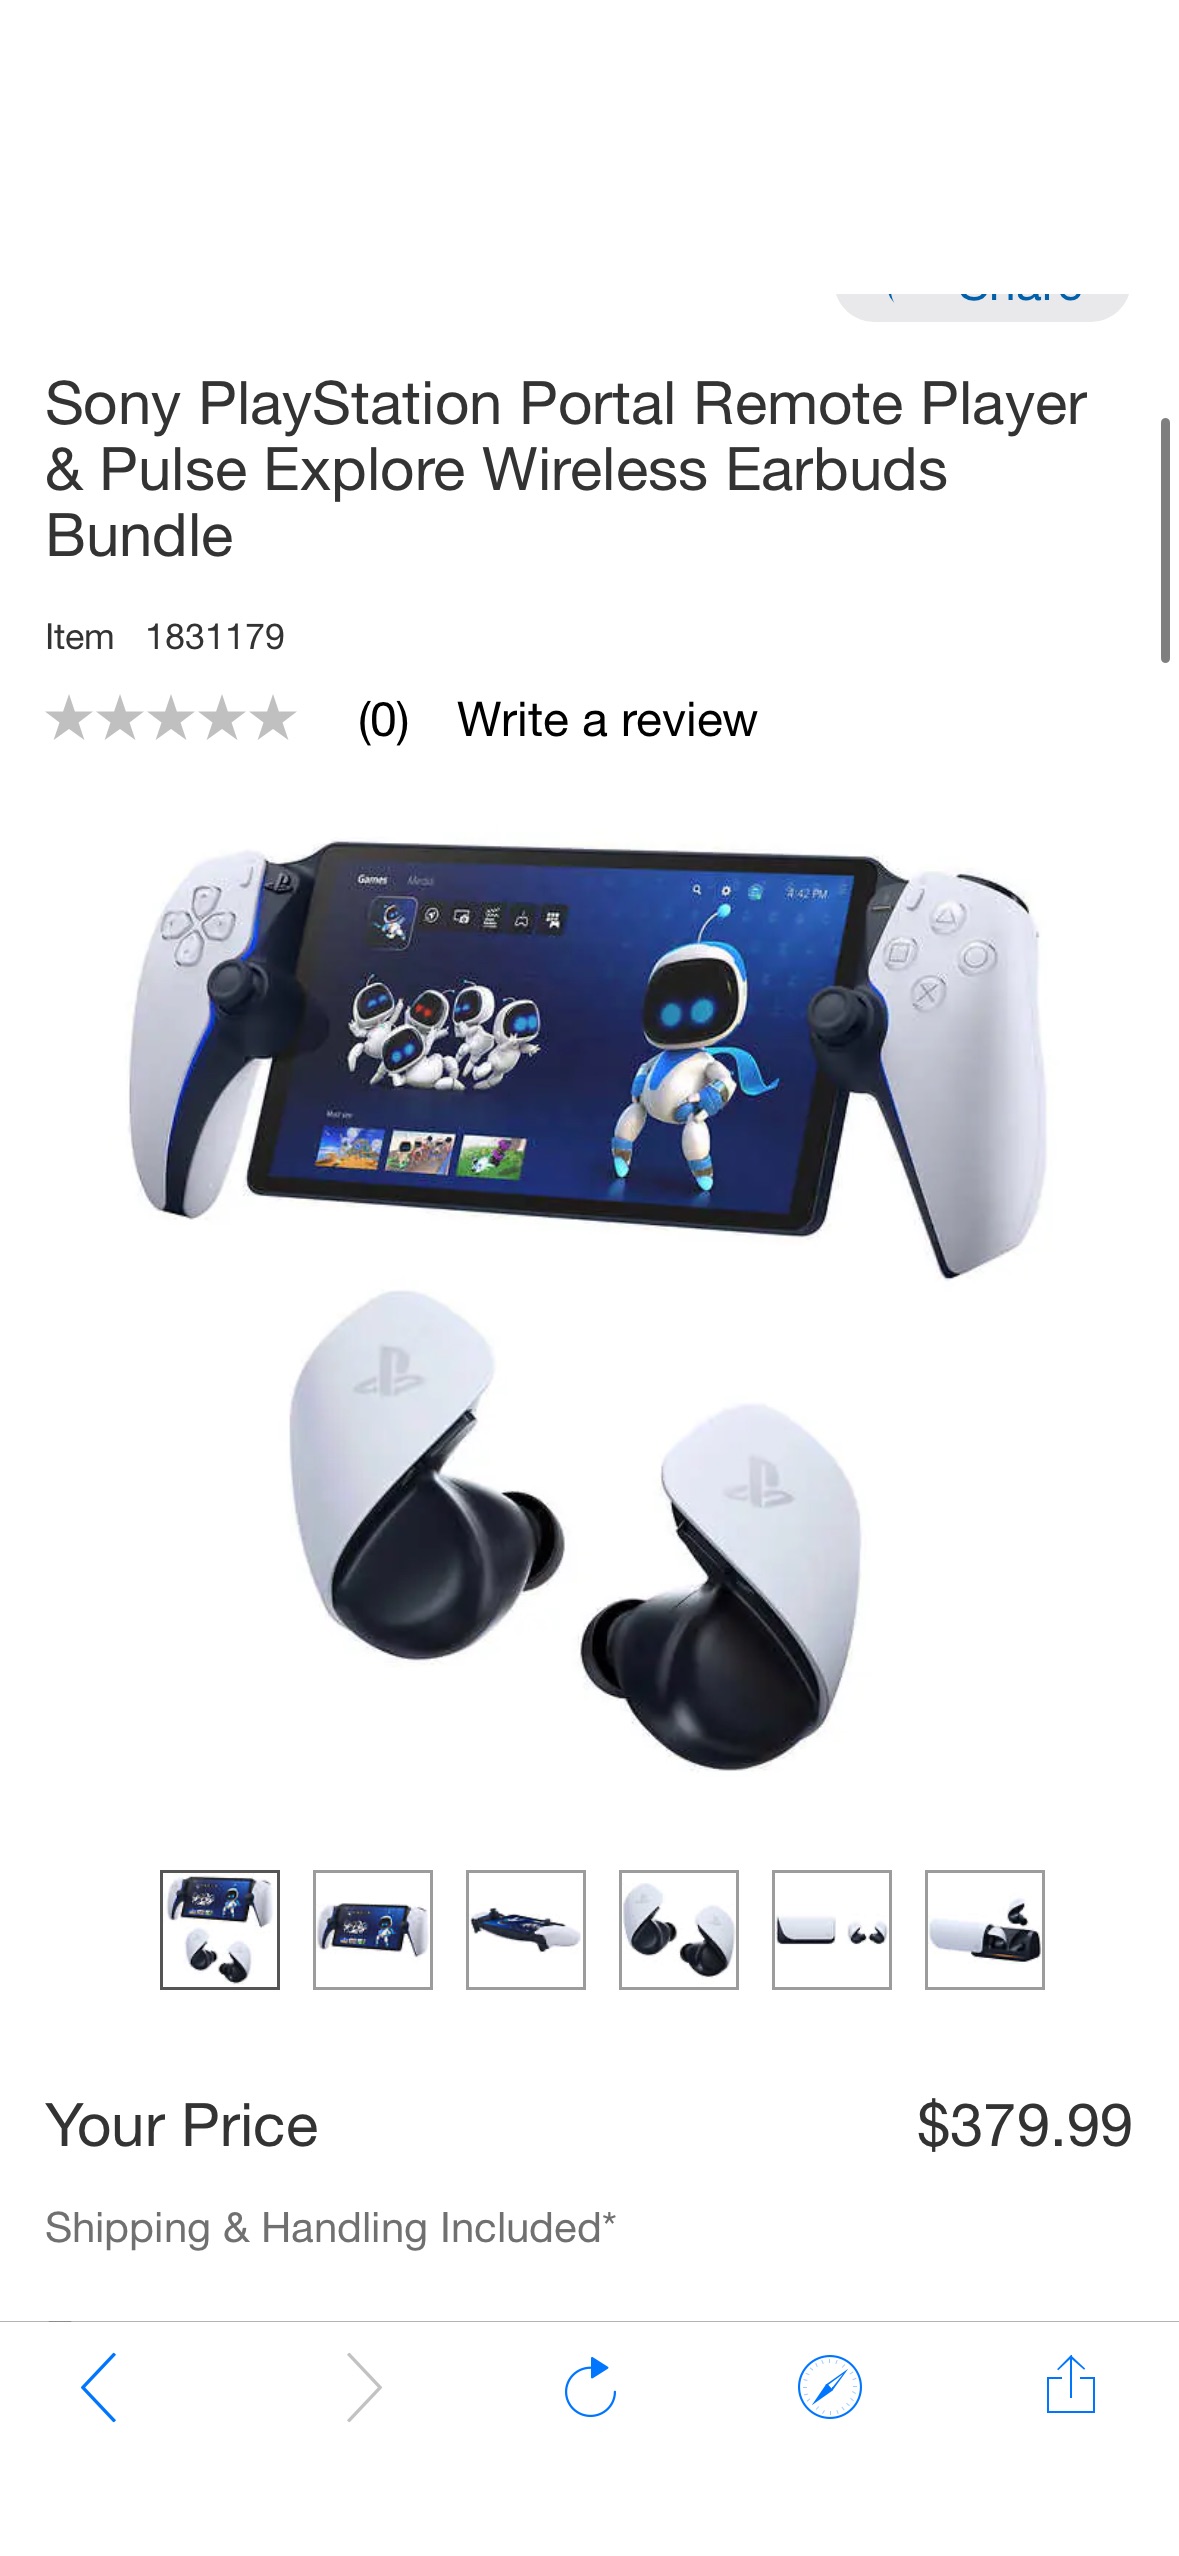 Sony PlayStation Portal Remote Player & Pulse Explore Wireless Earbuds Bundle | Costco